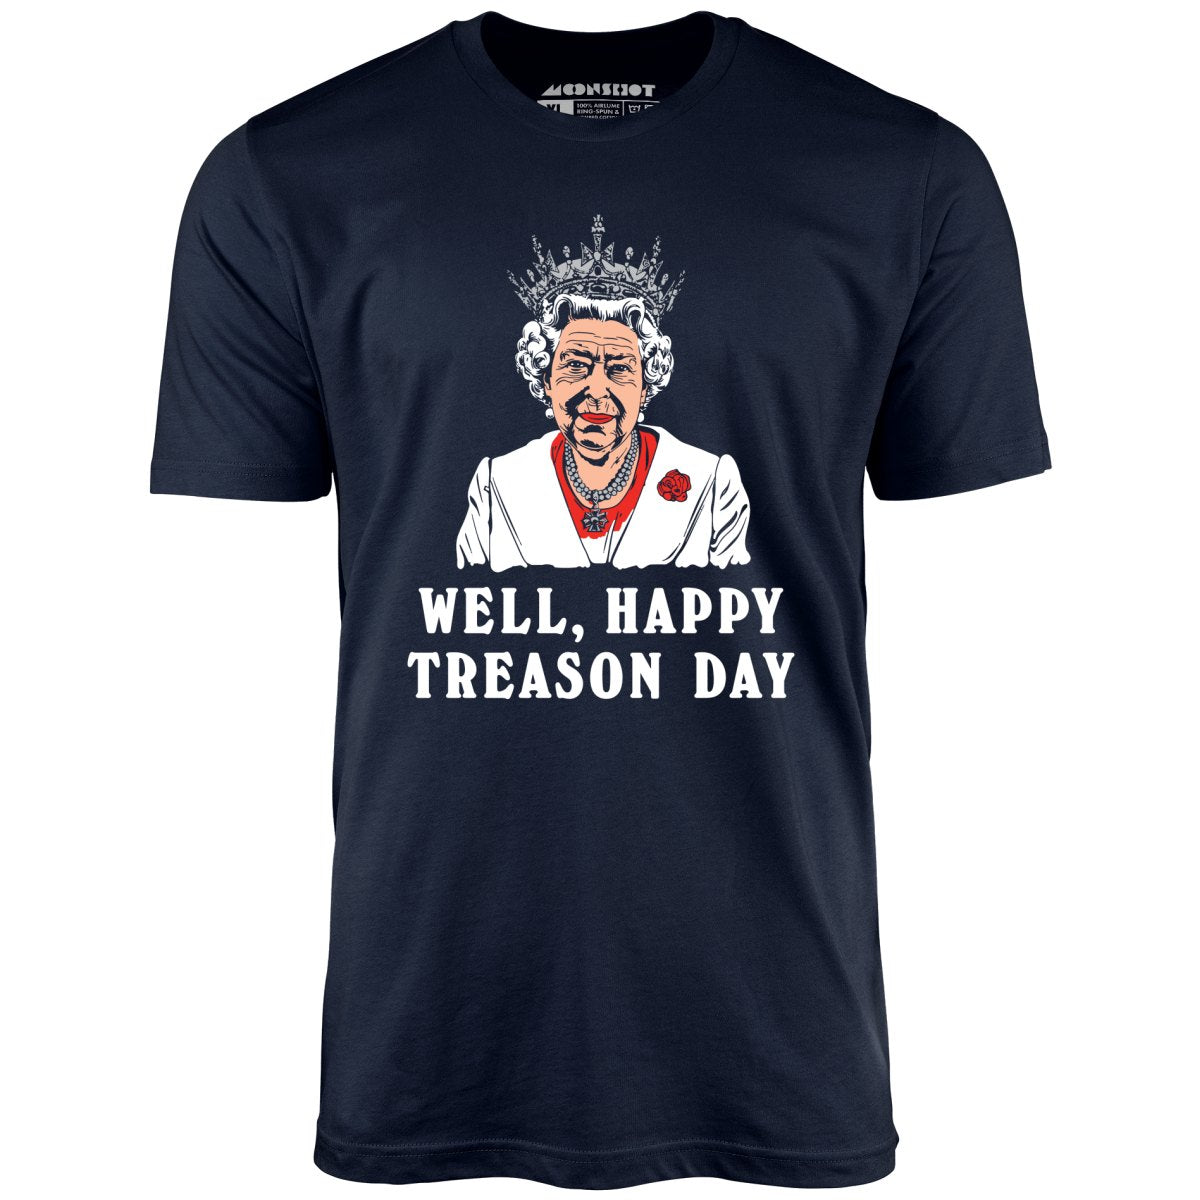 Well, Happy Treason Day - Unisex T-Shirt